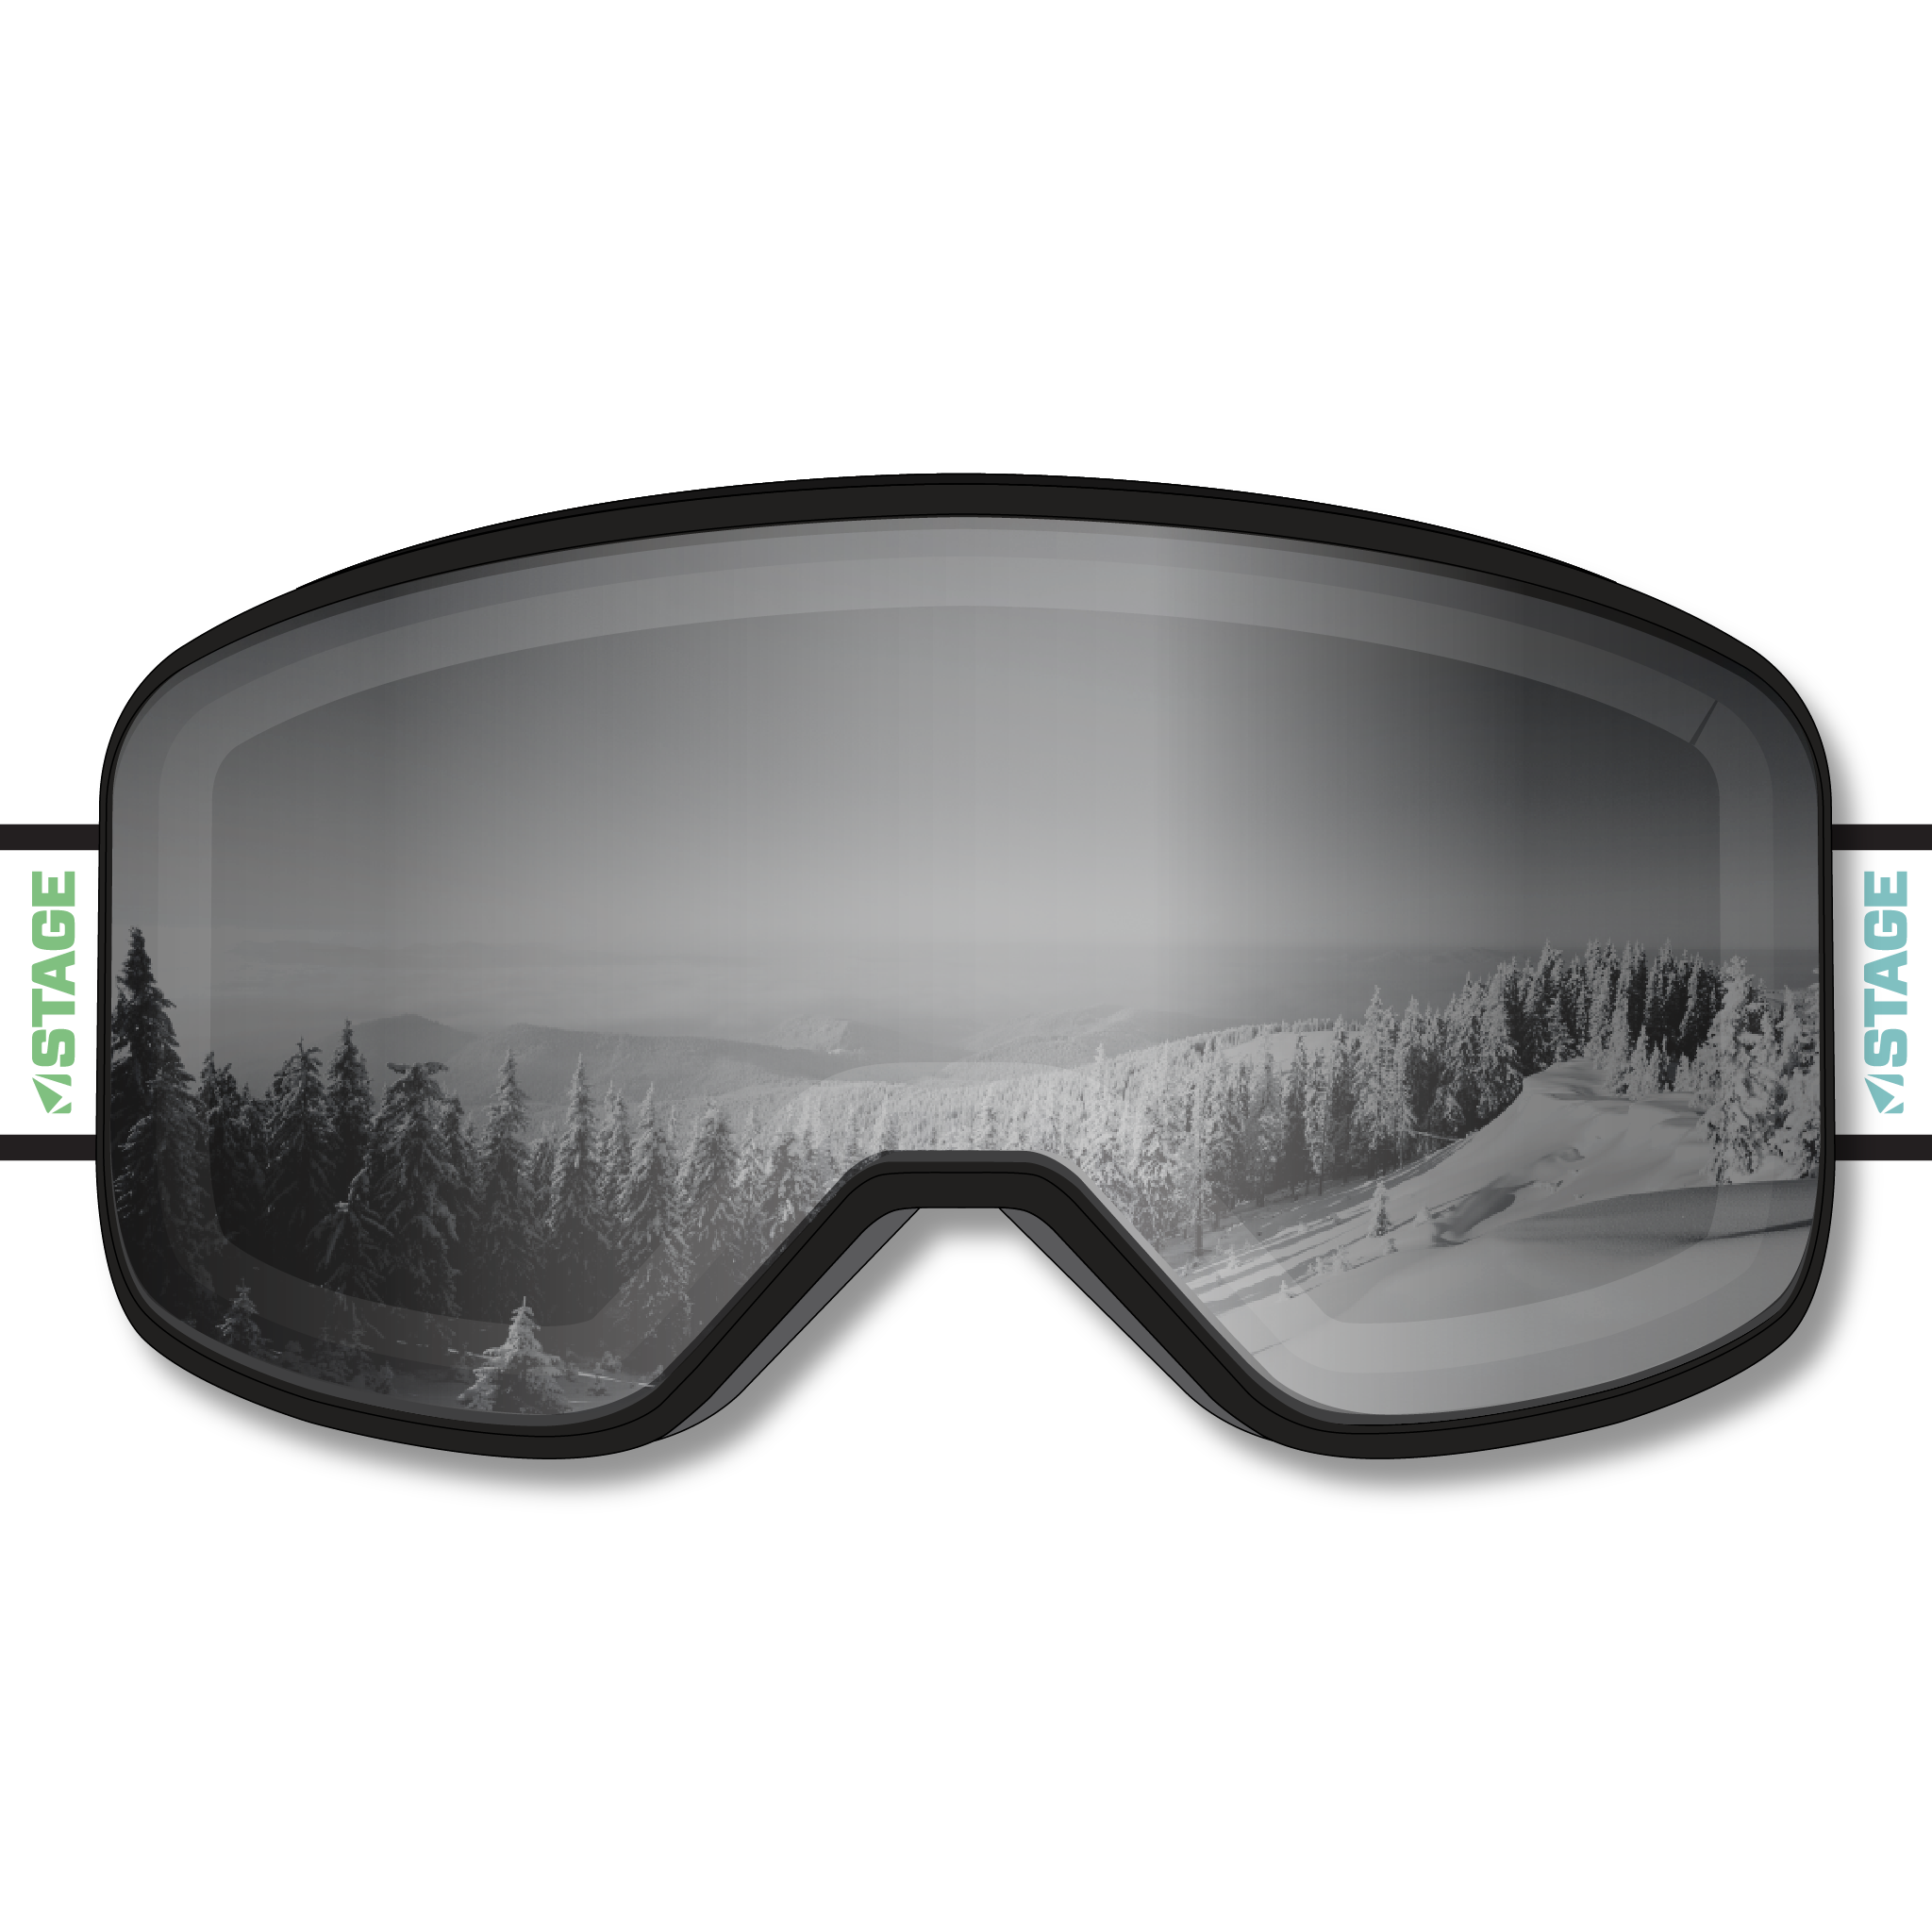 Cottonwood Canyons Foundation Prop Ski Goggle - Black Frame w/ Mirror Chrome Lens - Adult Universal